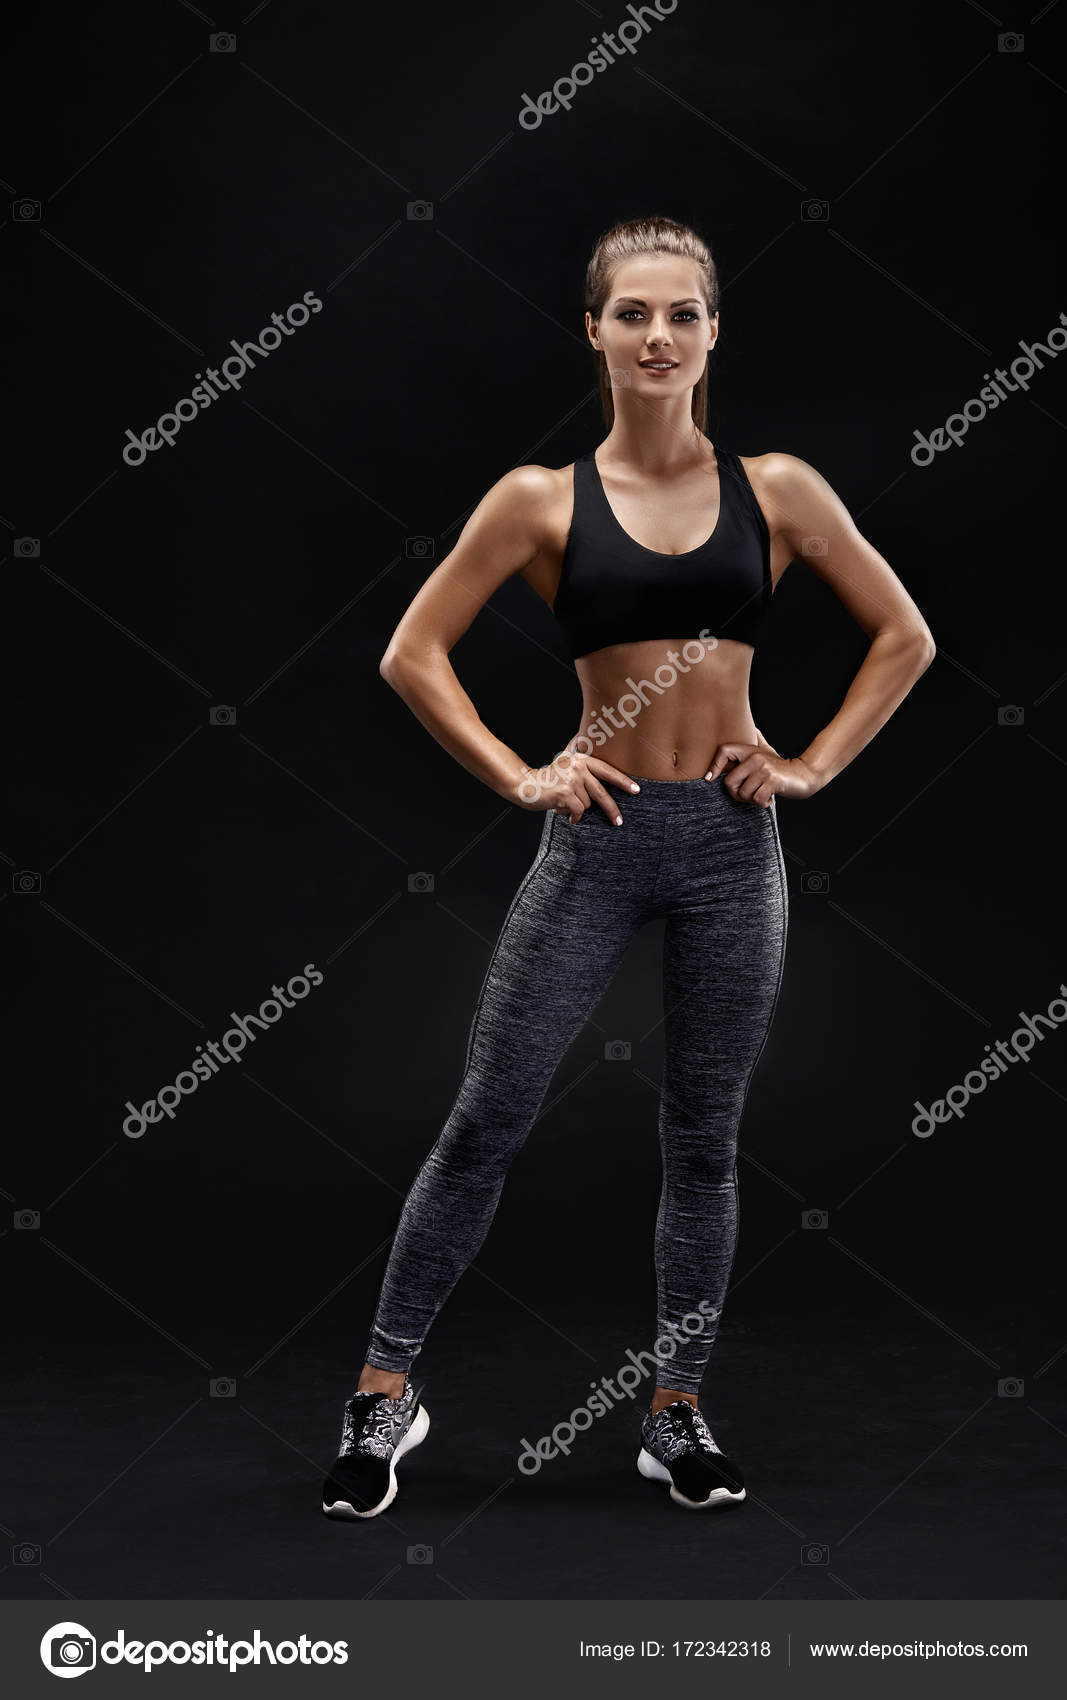 https://st3.depositphotos.com/5954192/17234/i/1600/depositphotos_172342318-stock-photo-shot-of-a-strong-woman.jpg